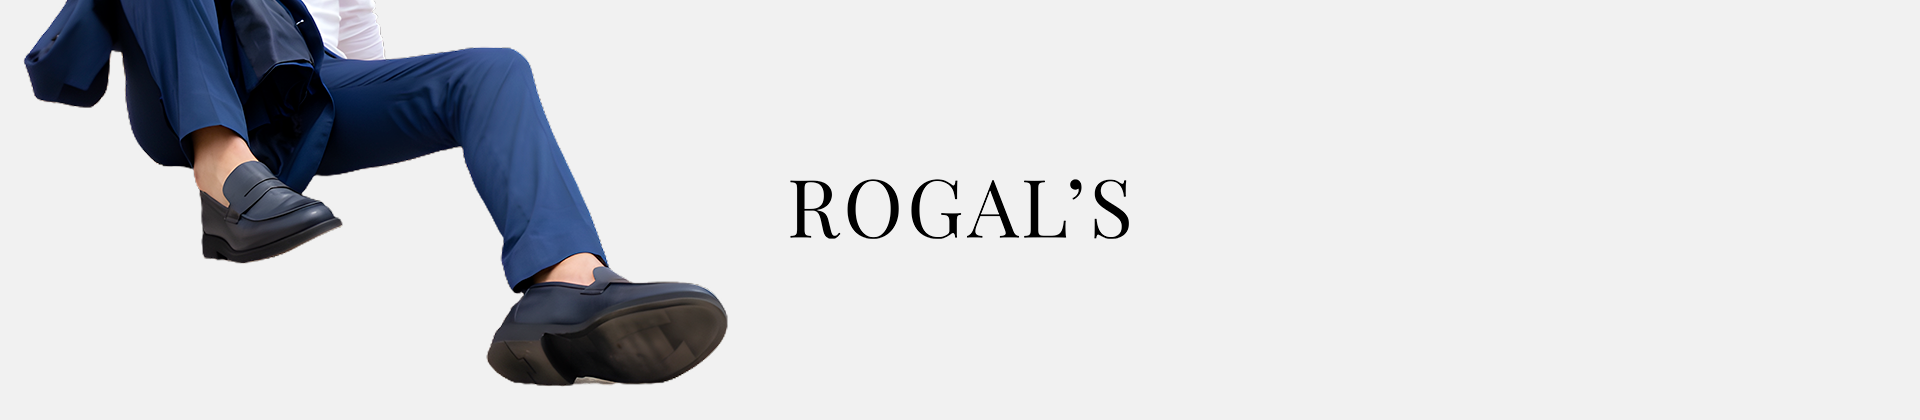 Rogals women shoes online